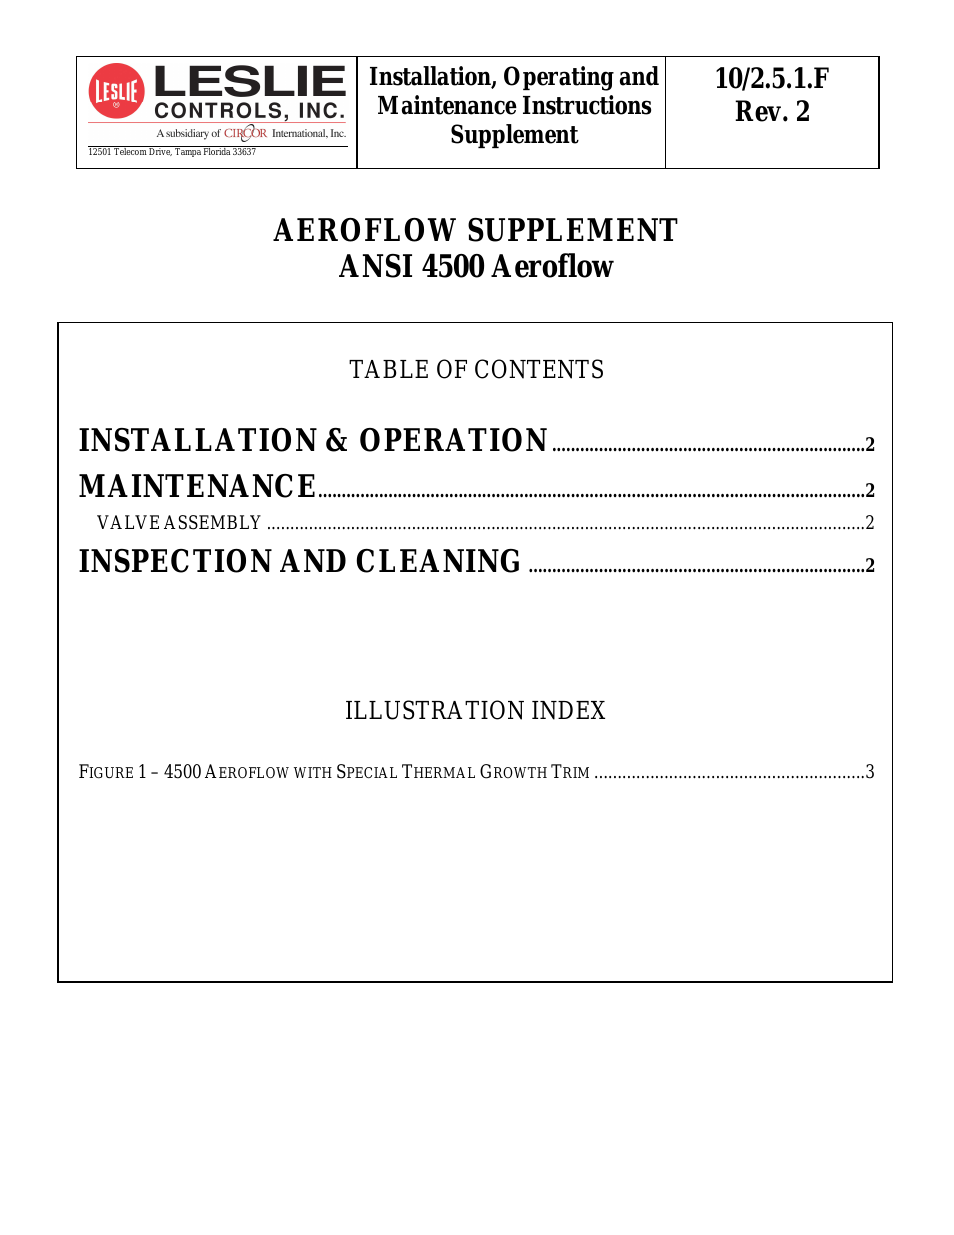 AEROFLOW SUPPLEMENT ANSI 4500